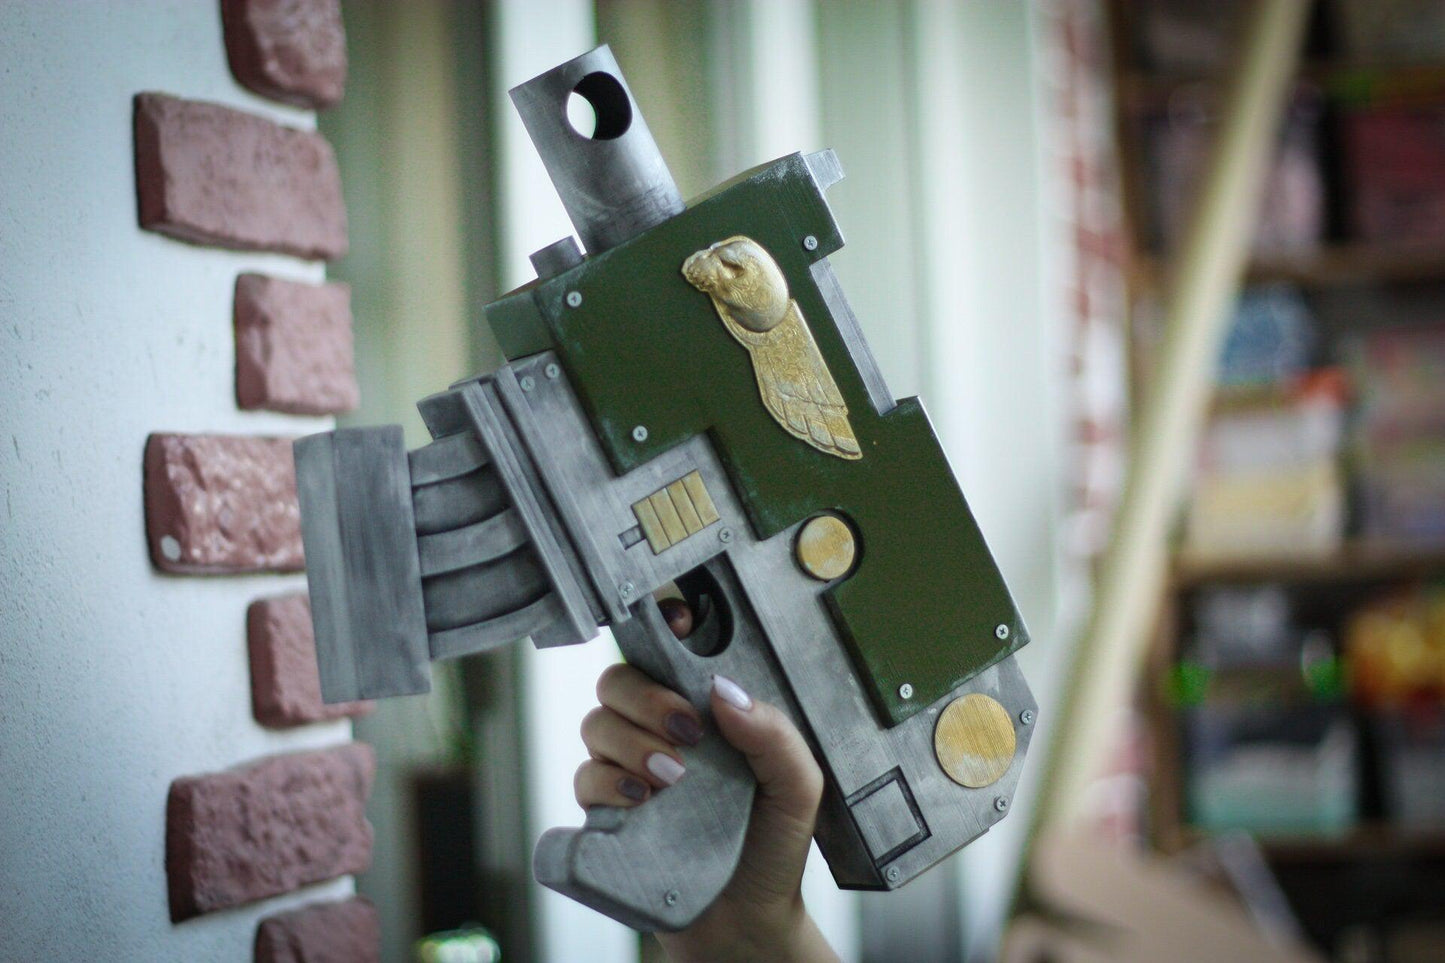 Bolt Pistol Replica | Warhammer 40K |  prop gun | Cosplay | Space Marine | Minotaurs | gun | cosplay weapon - 3DPrintProps